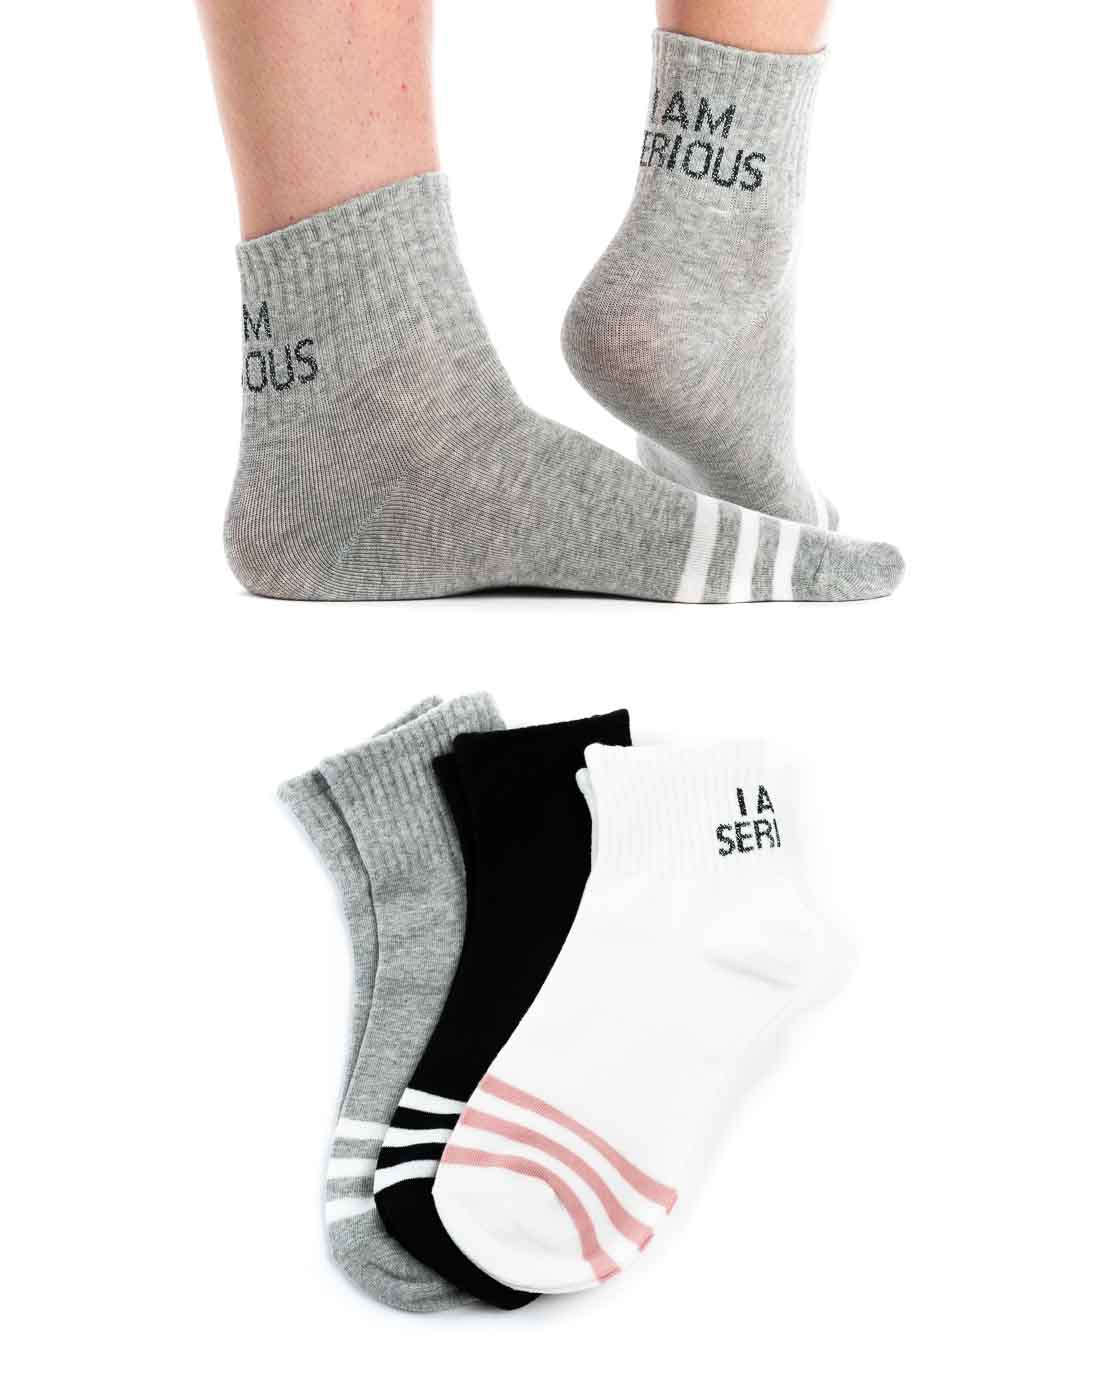 Ponožky I AM SERIOUS - 3 páry